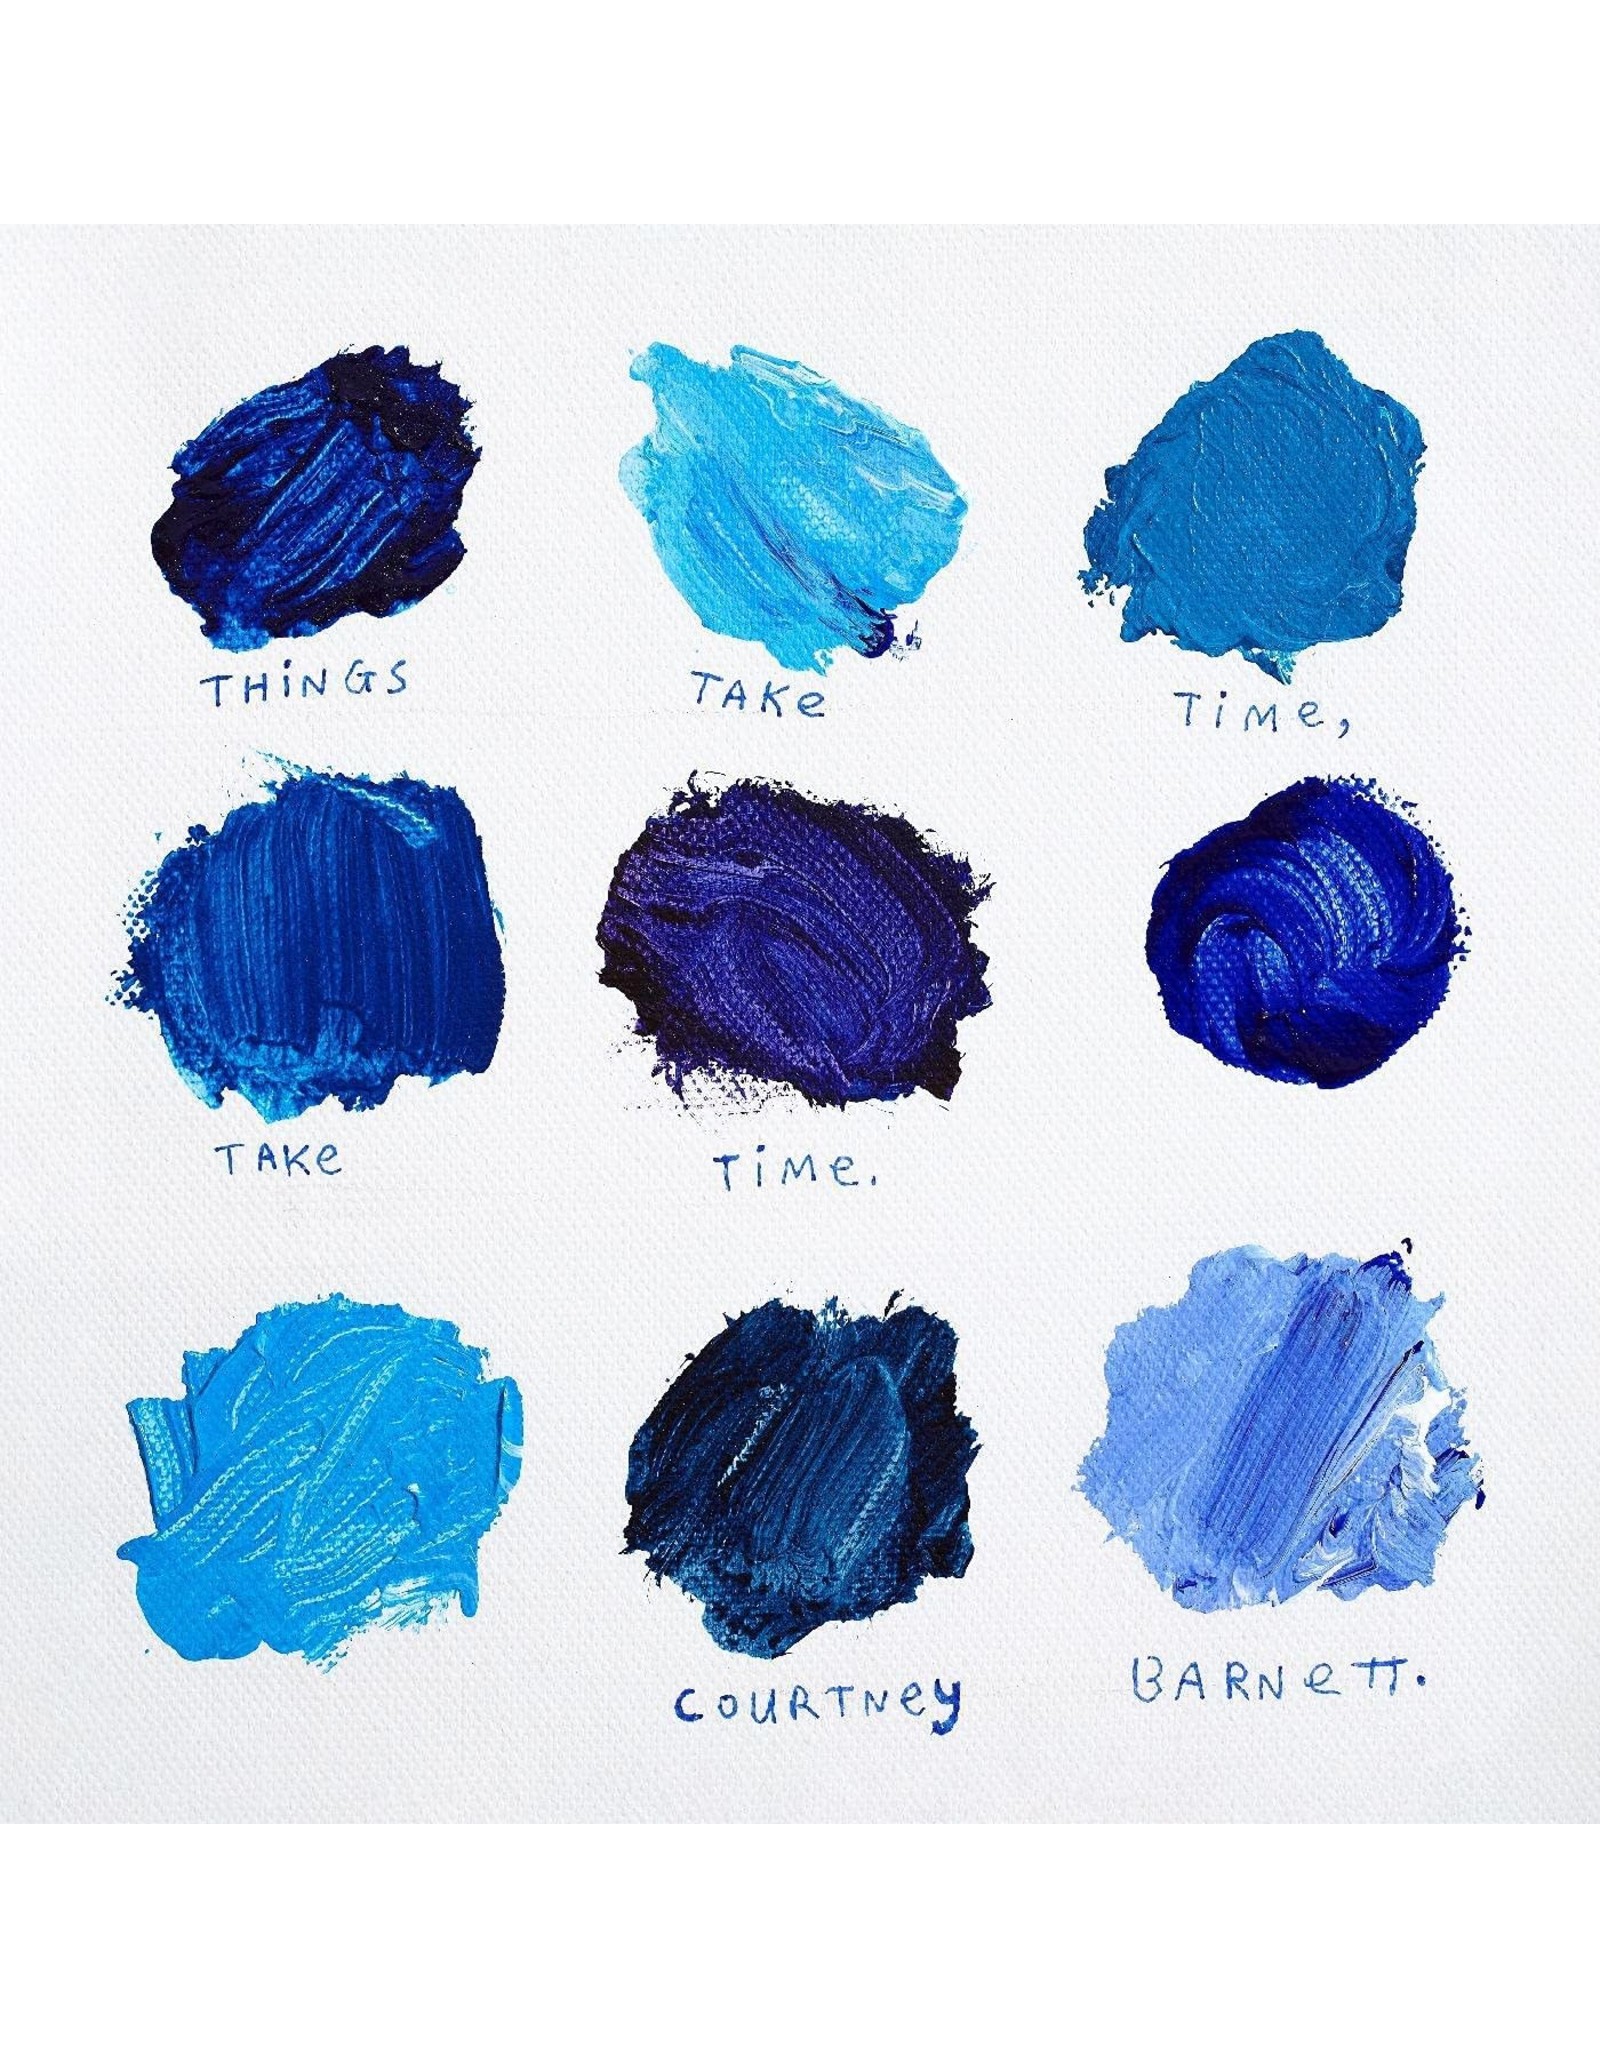 Courtney Barnett - Things Take Time, Take Time (Pavement Blue Vinyl)